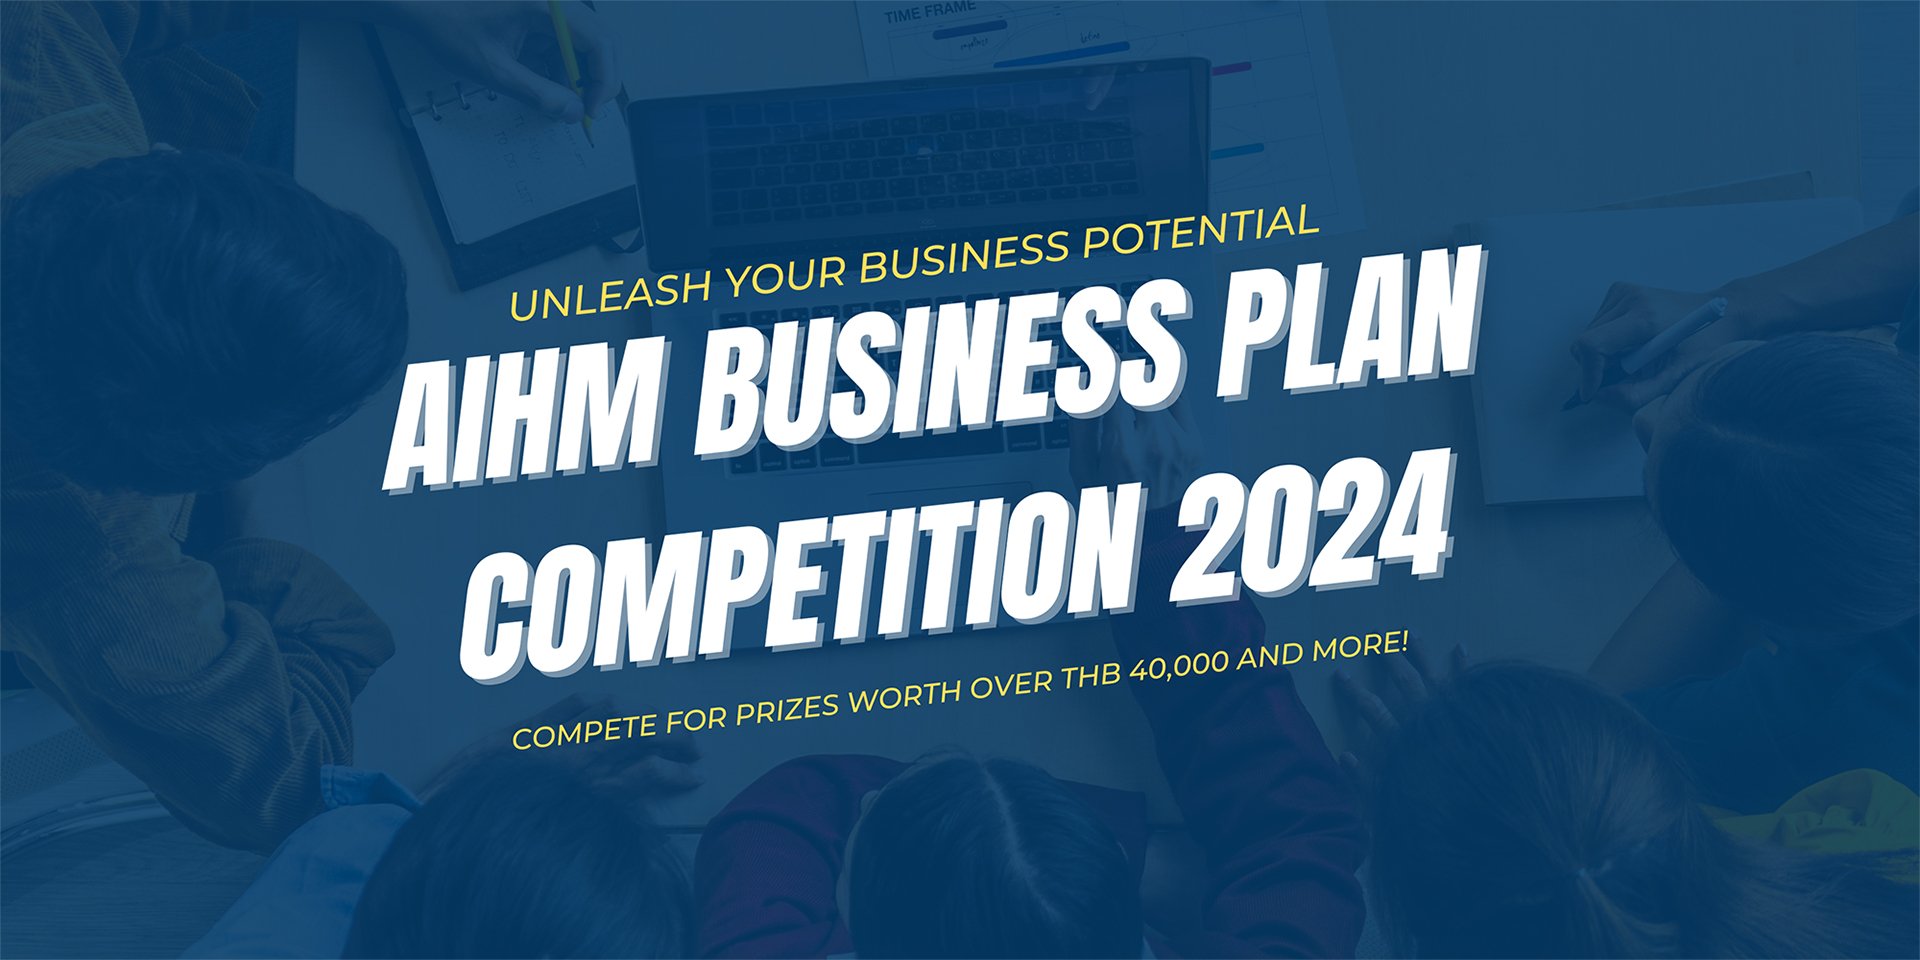 Business-Plan-1